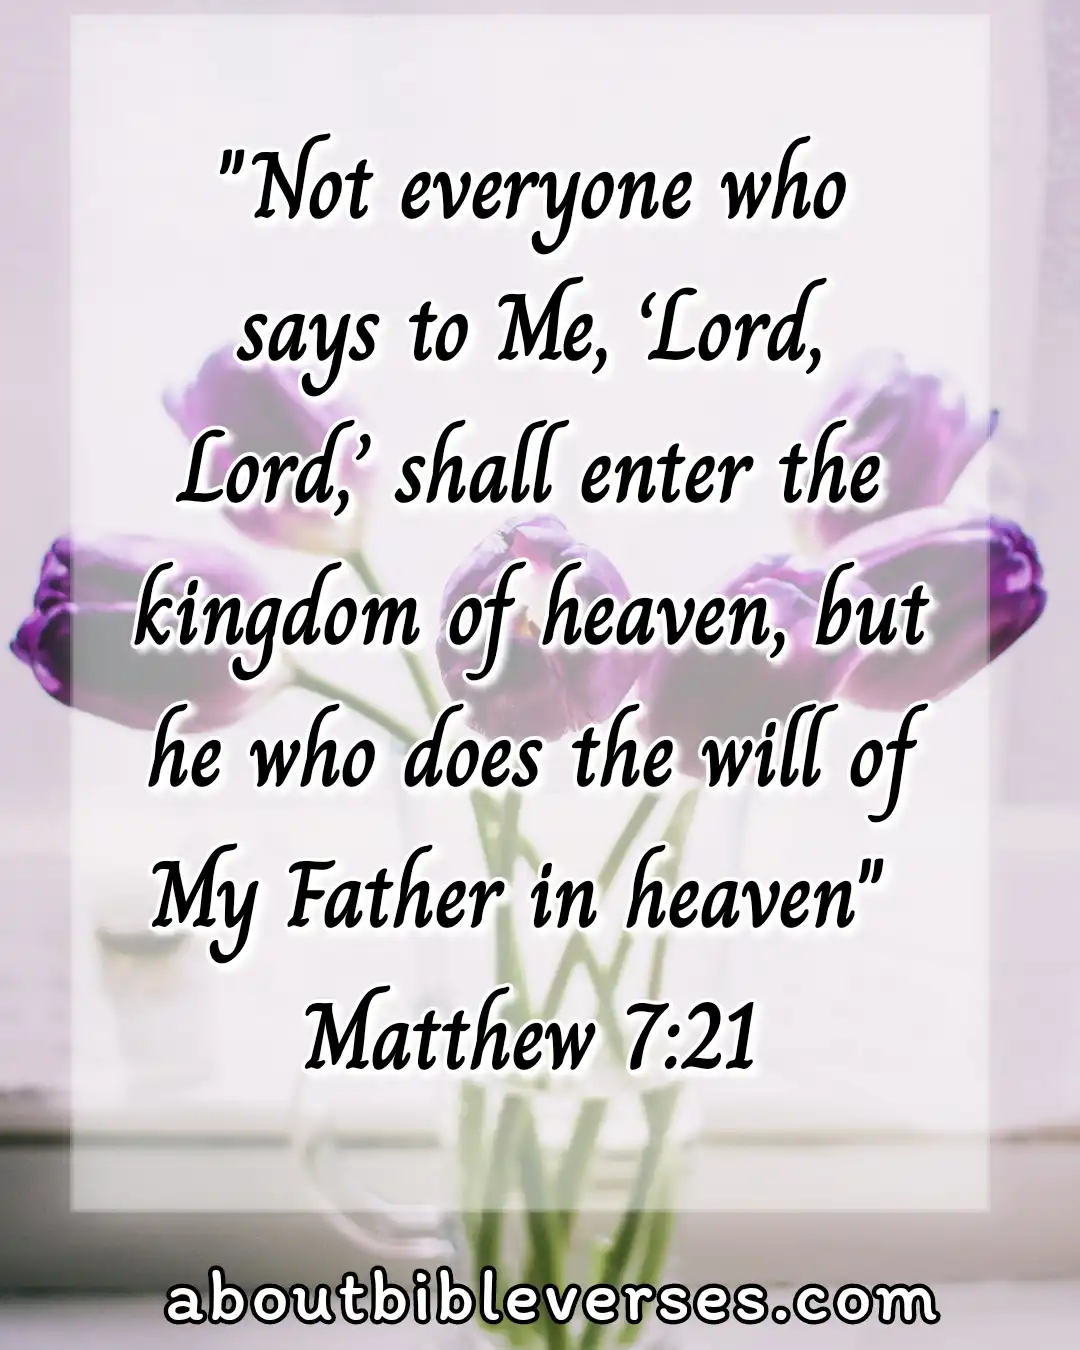 today's Bible Verse (Matthew 7:21)